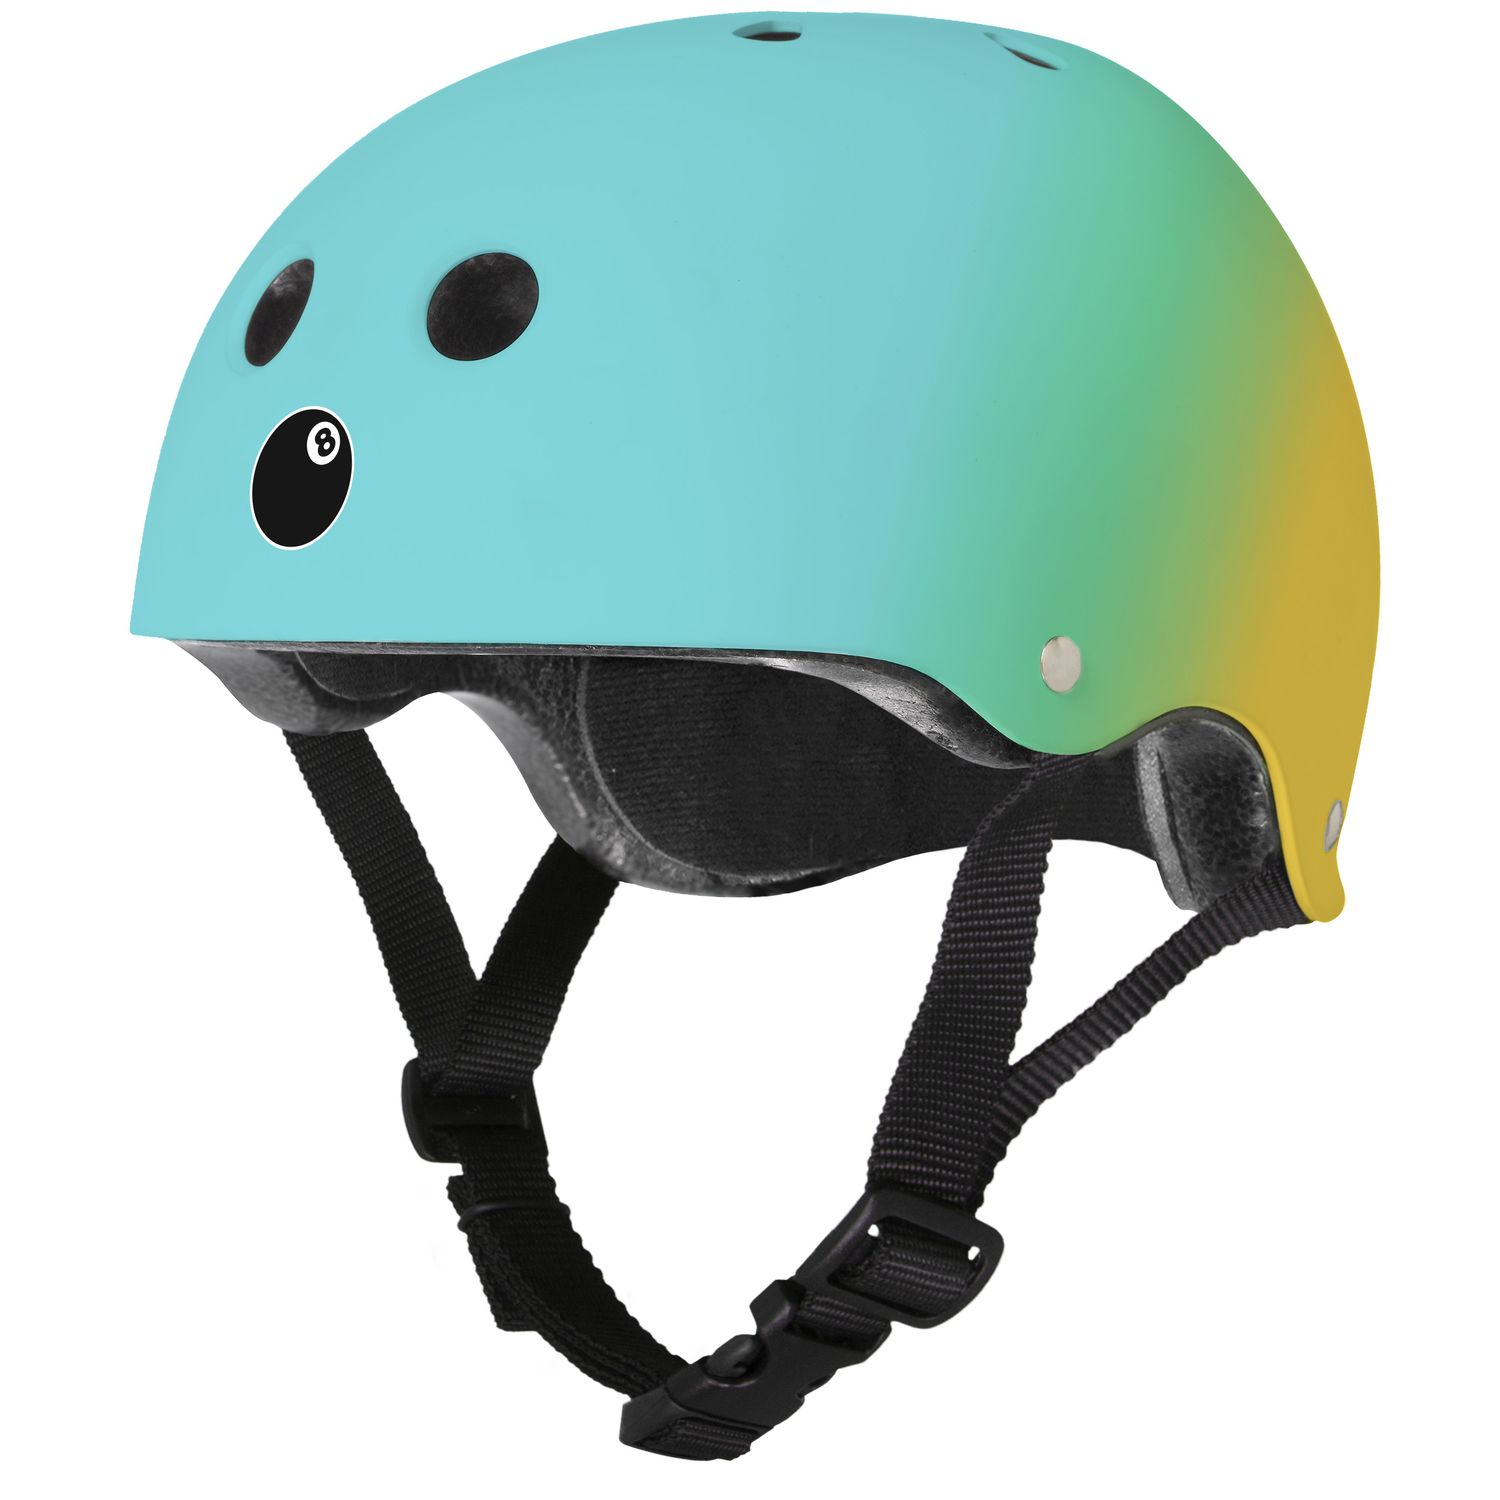 Шлем защитный Eight Ball Coral Reef (8+) - голубой, зелёный, жёлтый шлем защитный sportex jr f11720 1 голубой